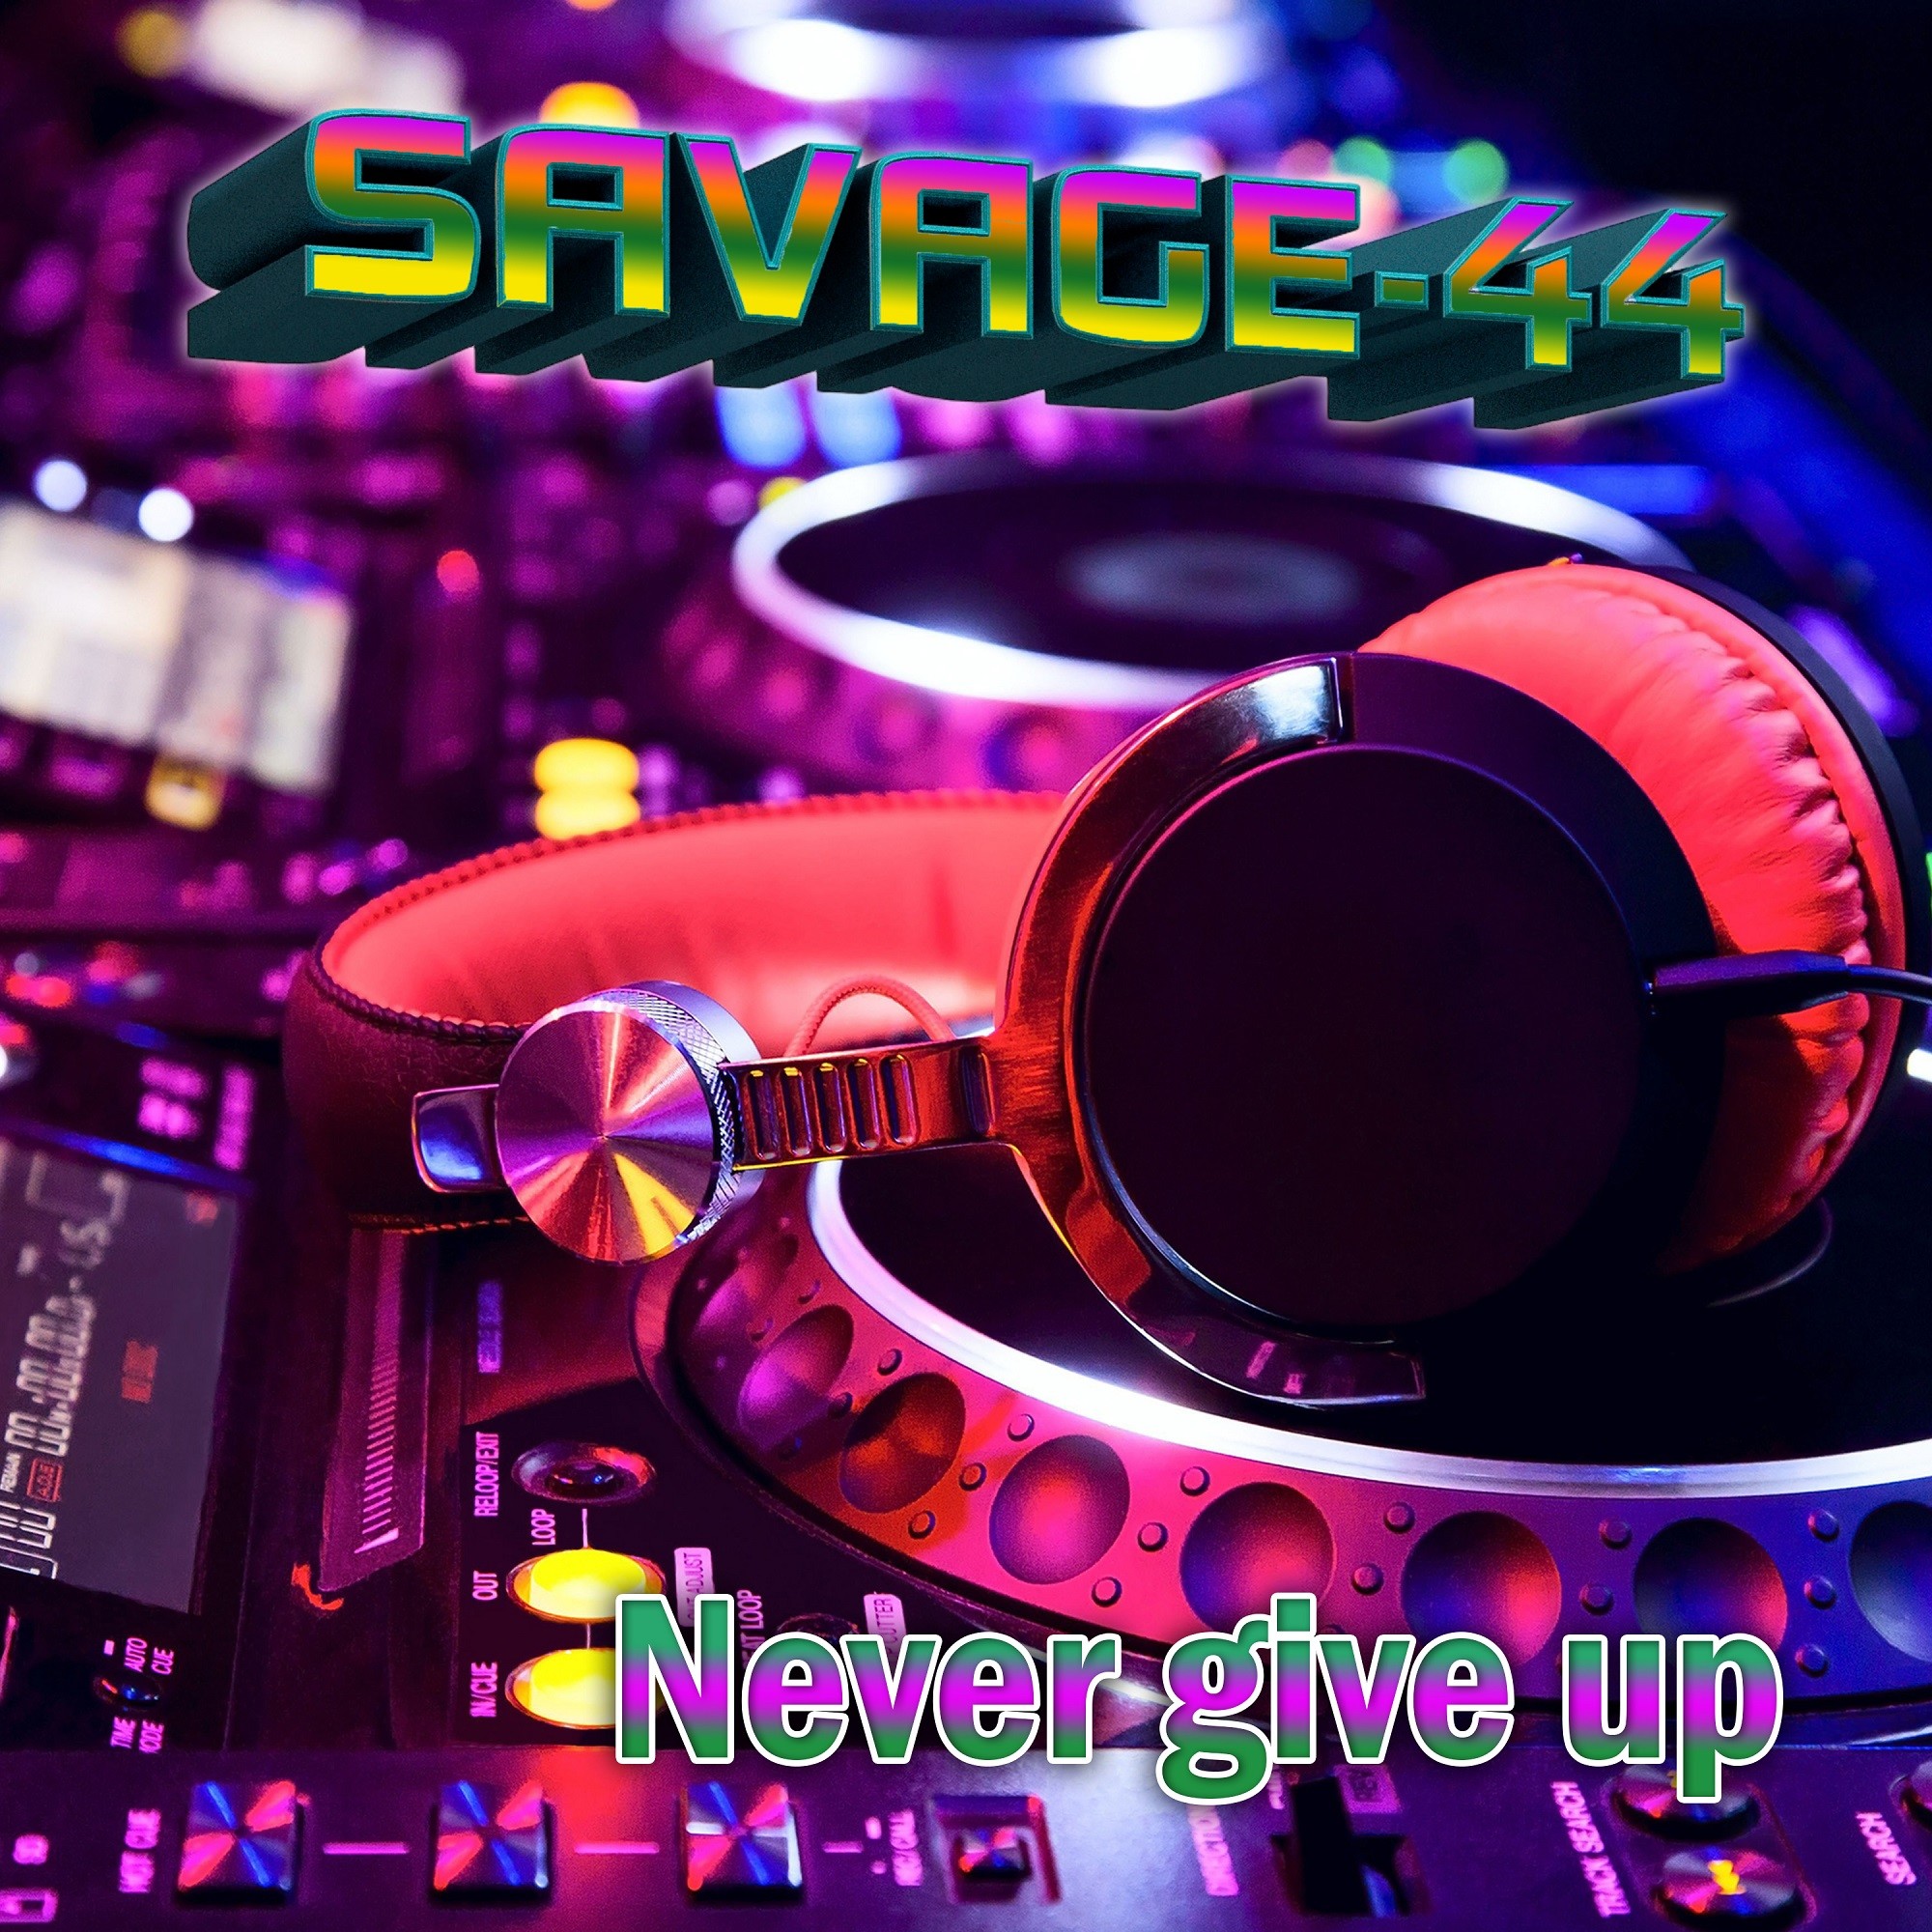 Savage 44 the music ring